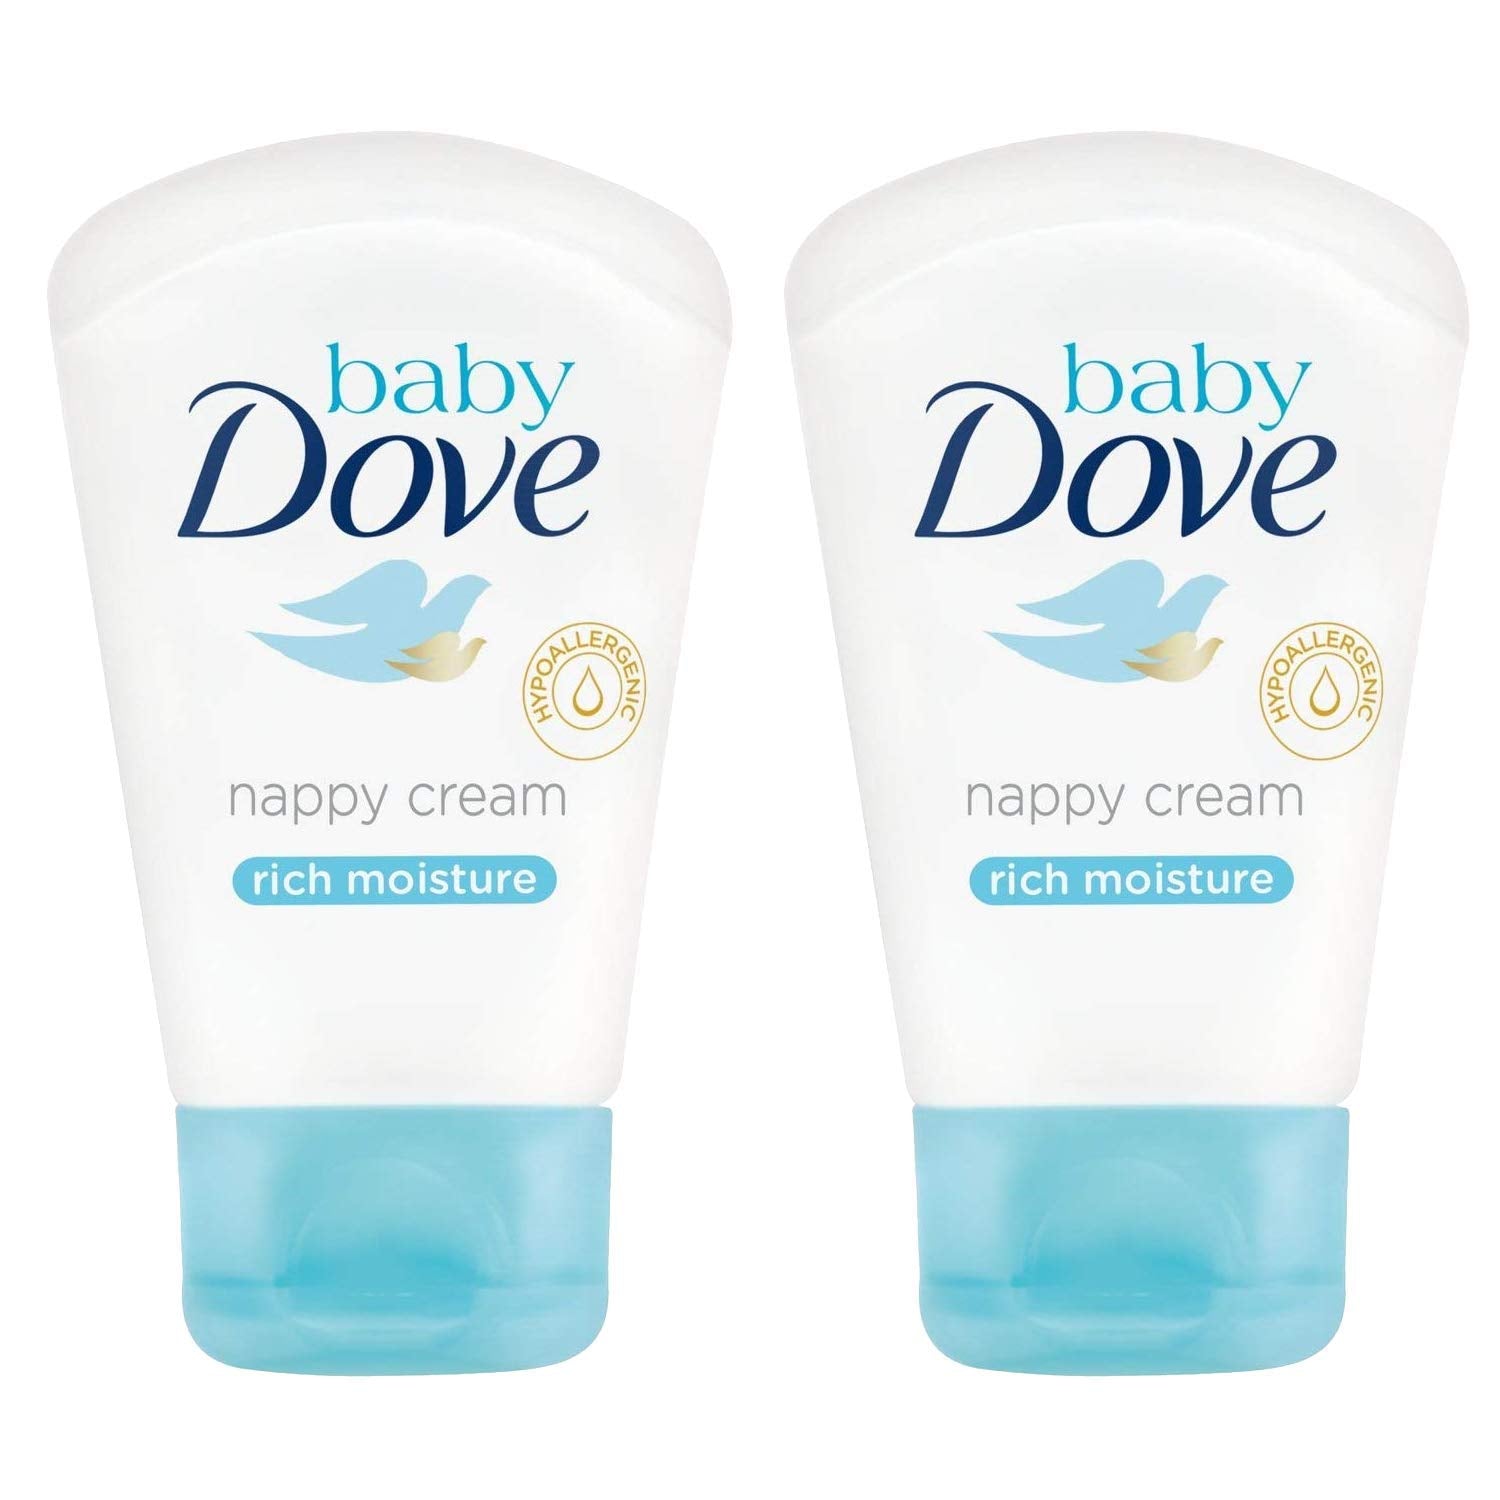 Dove Baby Rich Moisture Nappy Cream - 1.58 Oz / 45 g x 2 Pack